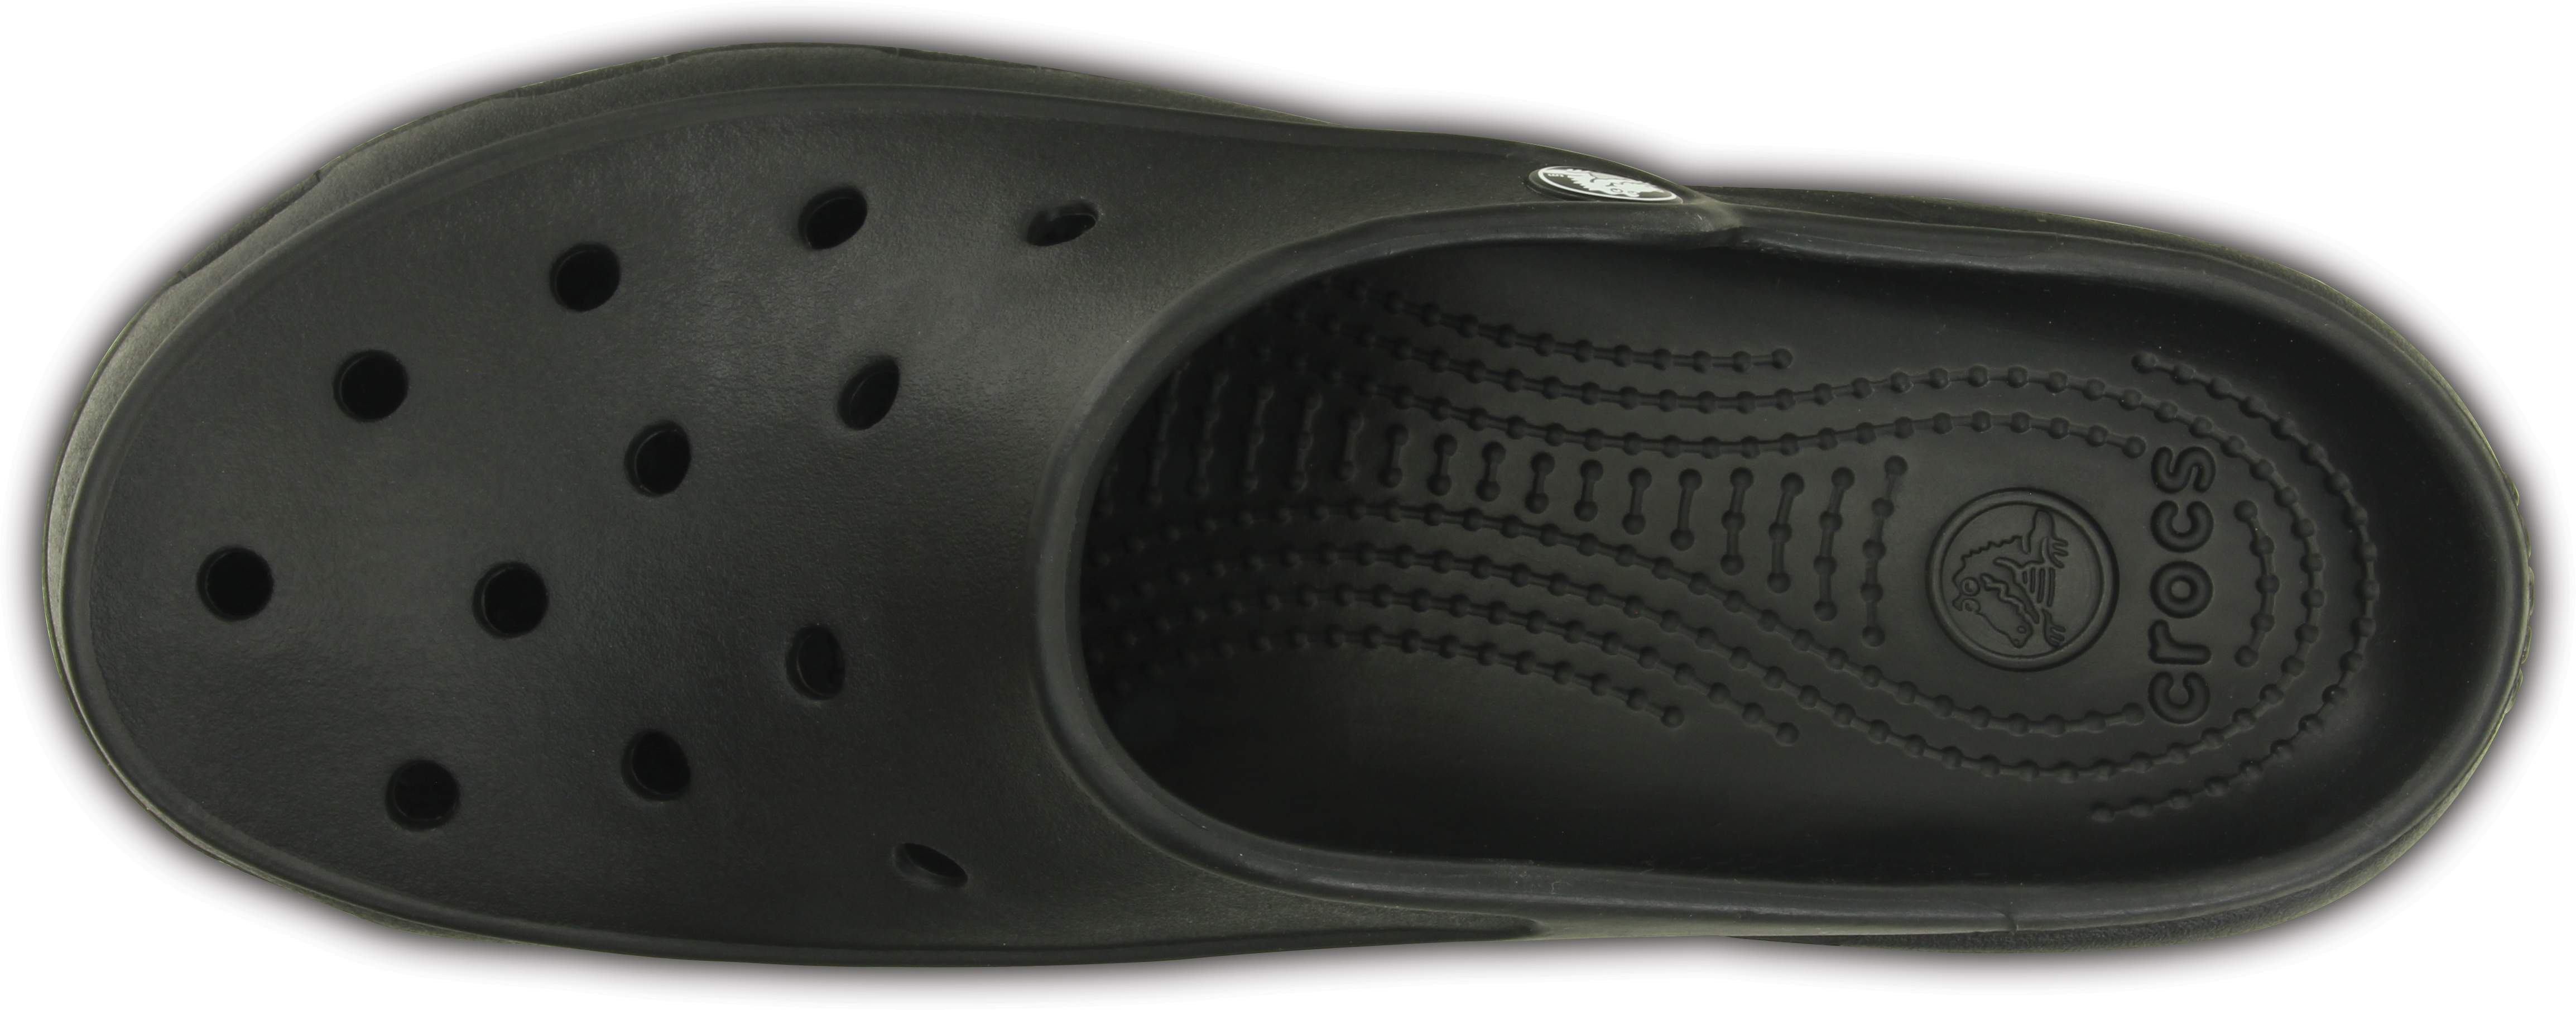 crocs for skinny feet